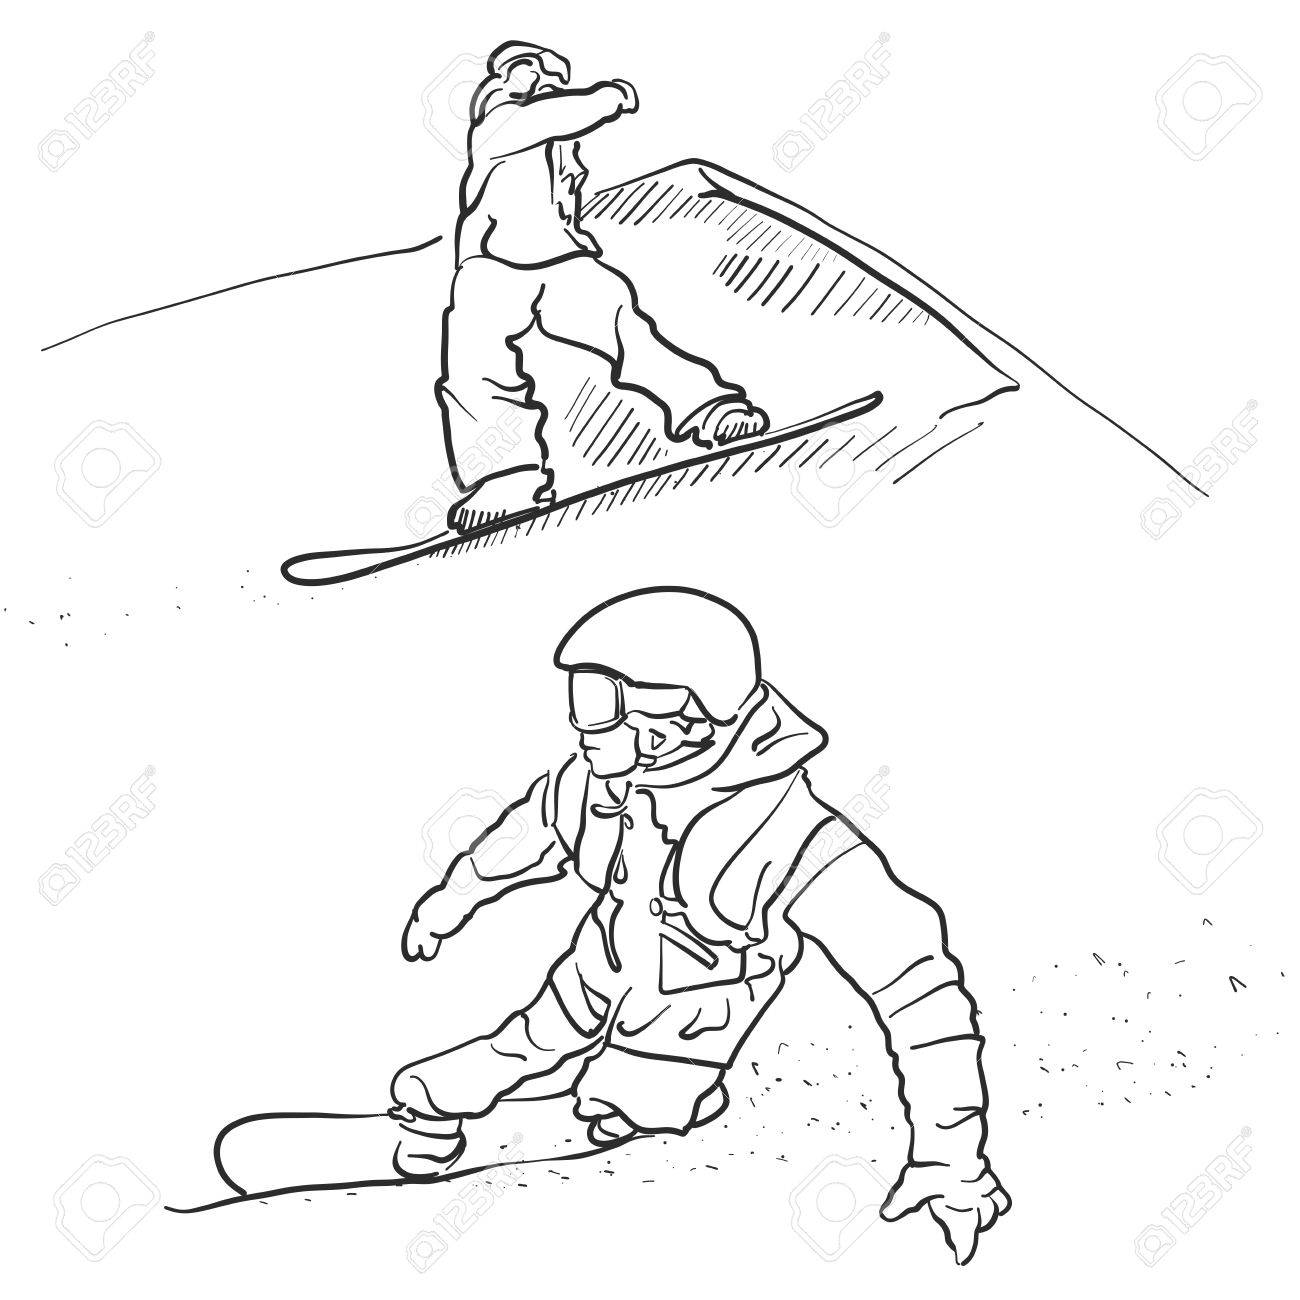 Человек на сноуборде рисунок